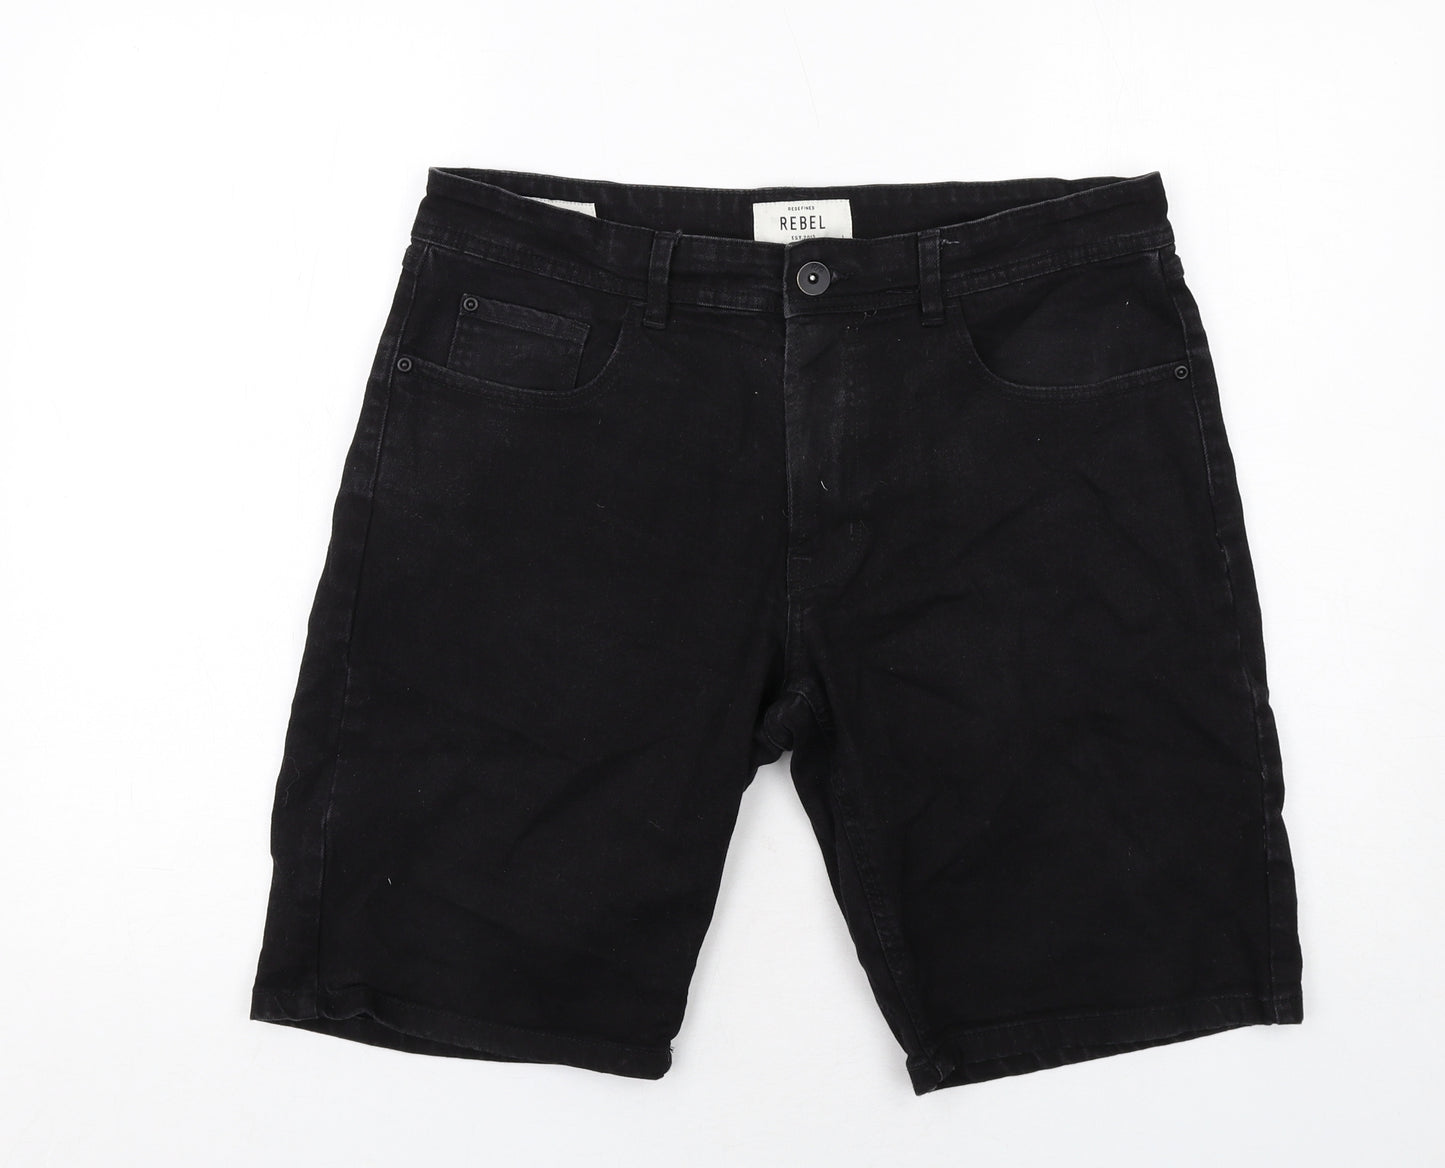 Rebel Mens Black Cotton Chino Shorts Size L Regular Zip